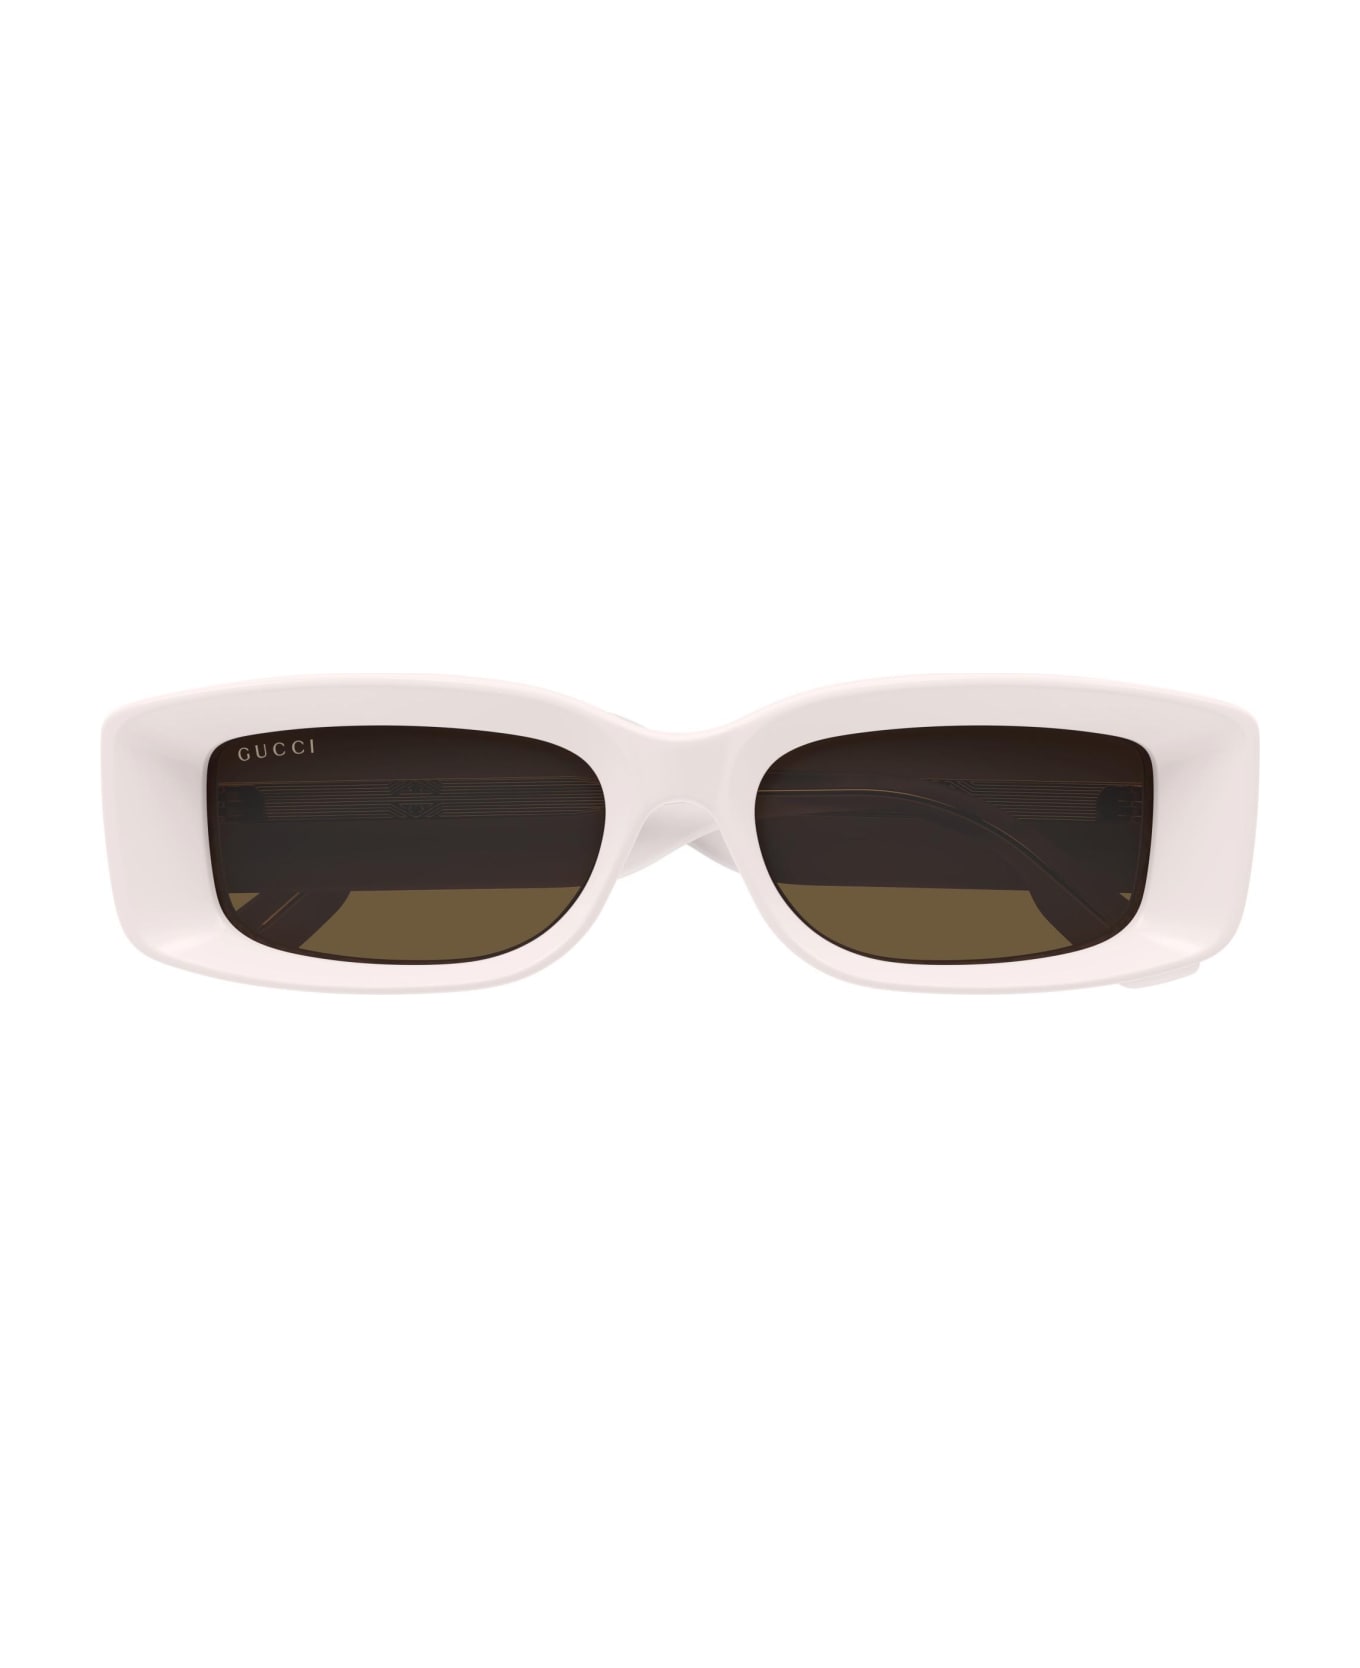 Gucci Eyewear Sunglasses - Avorio/Marrone